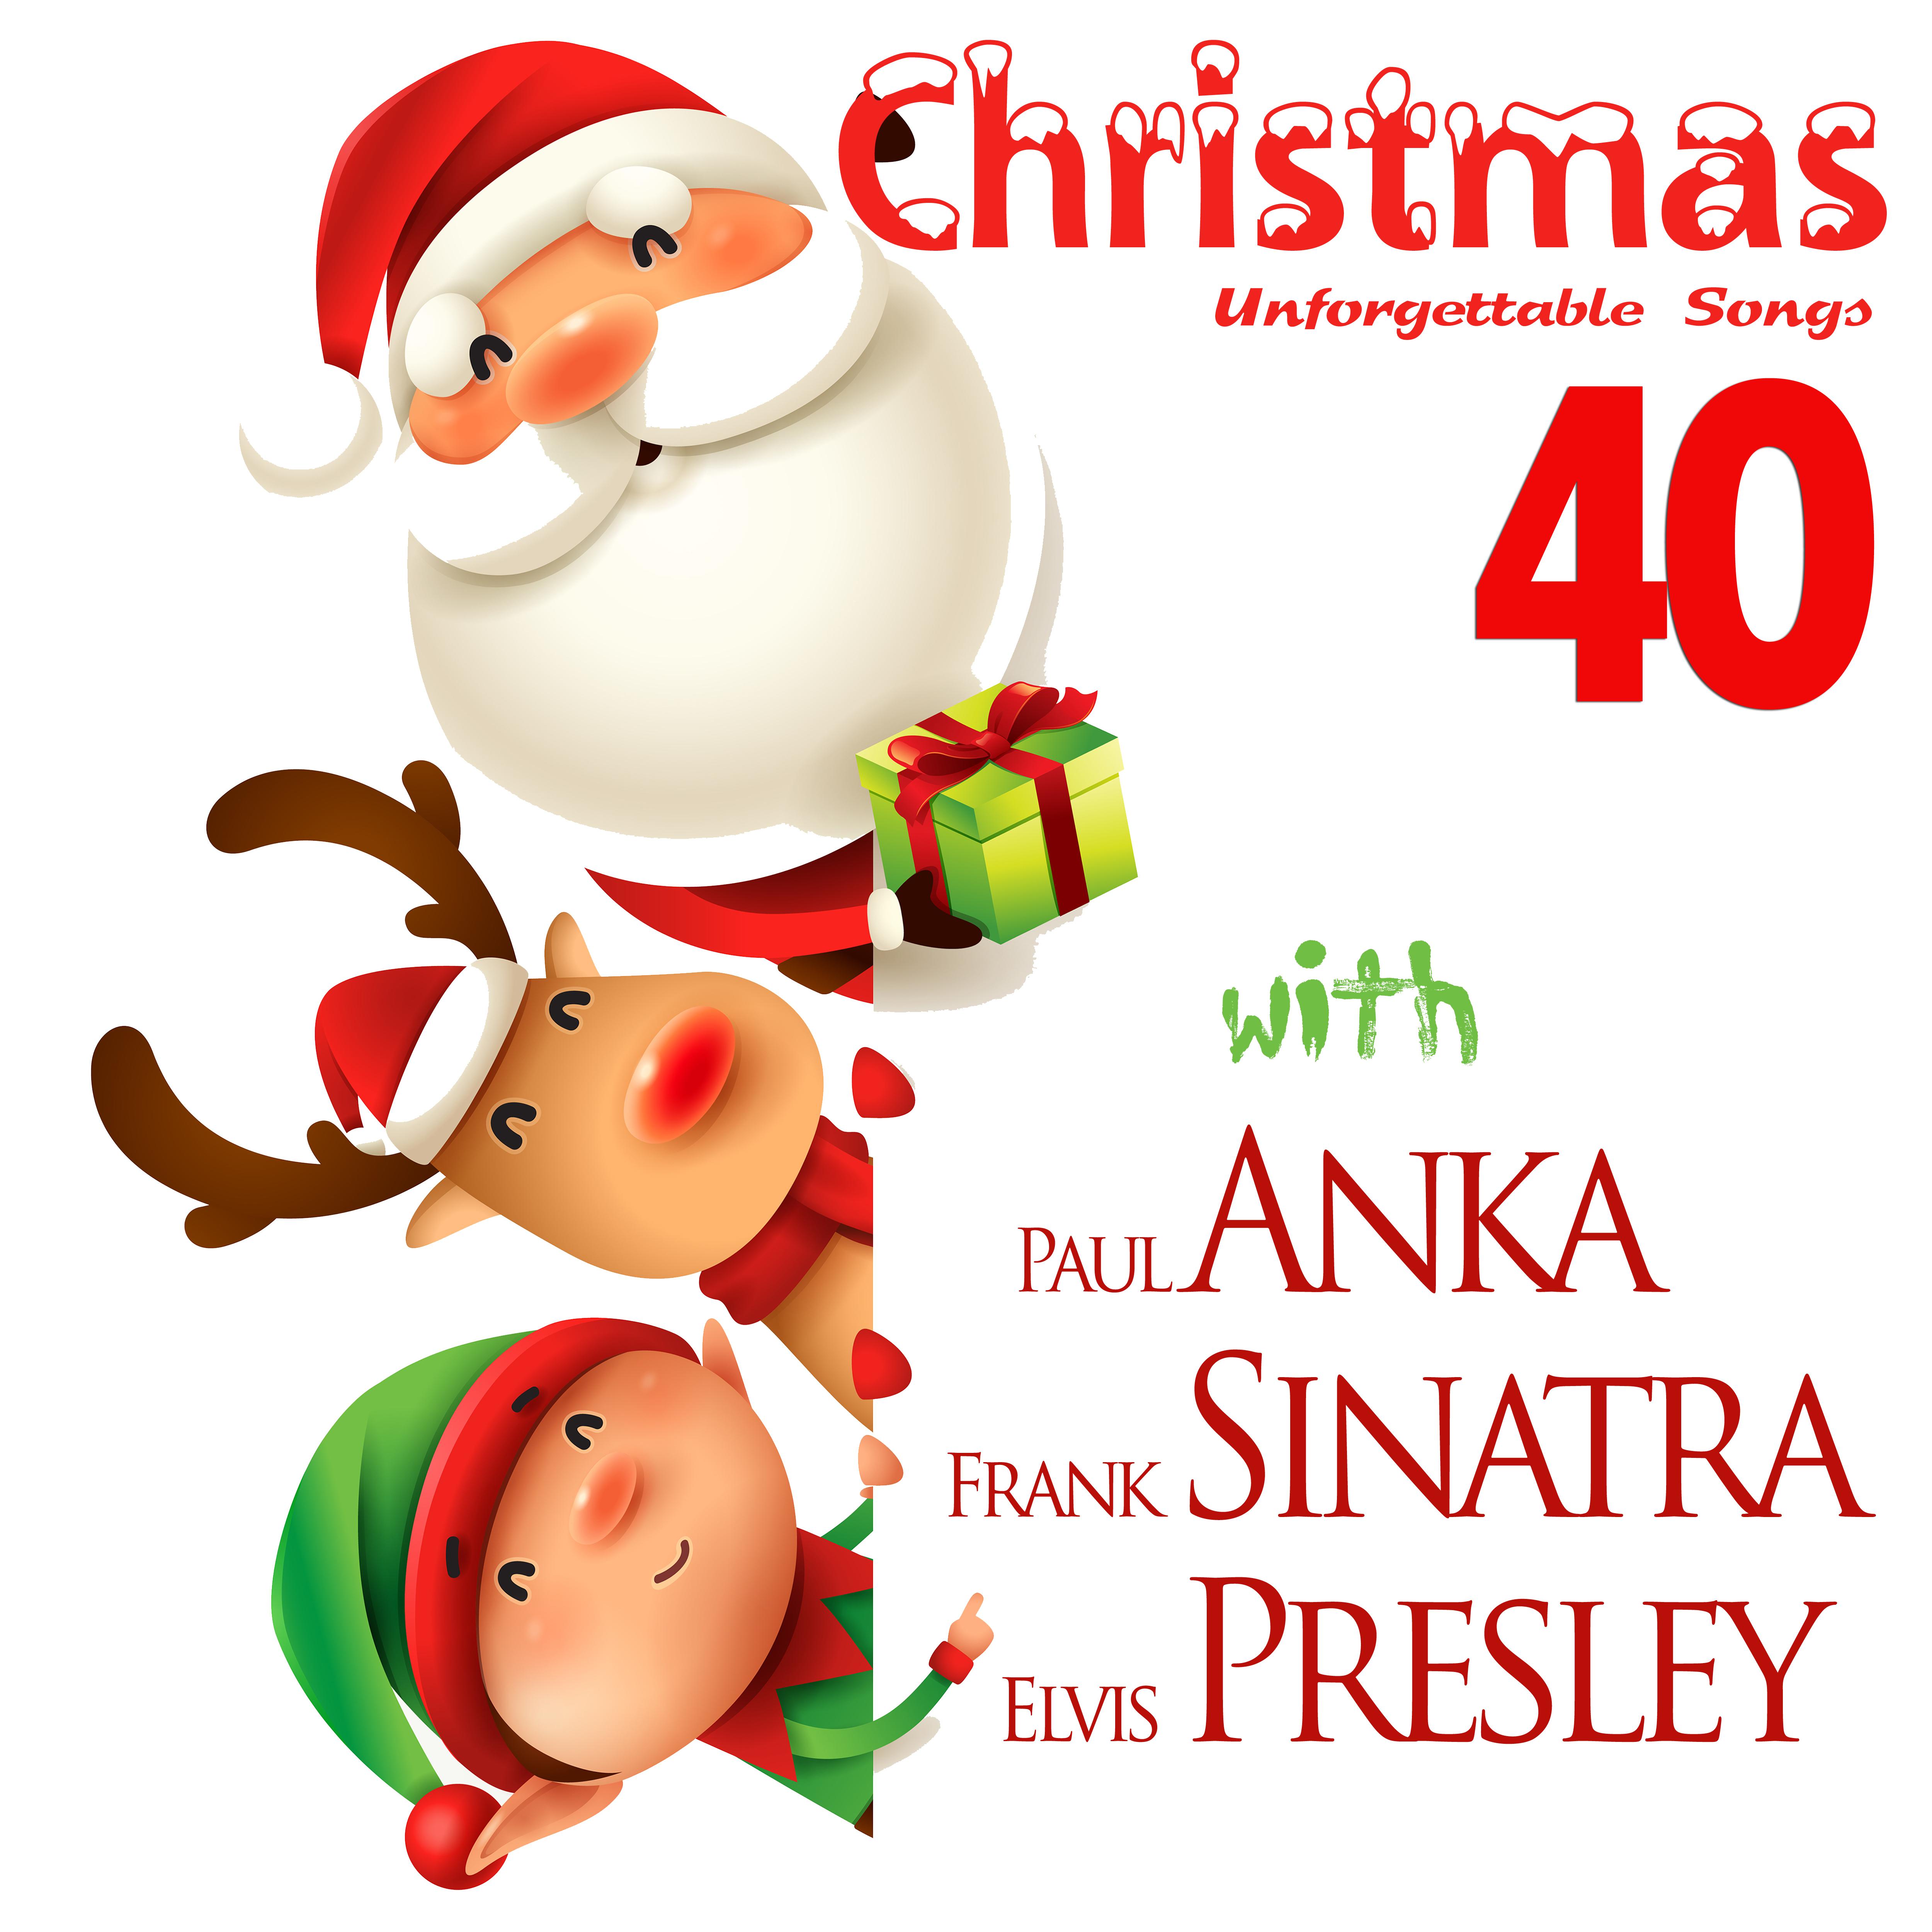 Christmas with Frank Sinatra, Elvis Presley, Paul Anka专辑